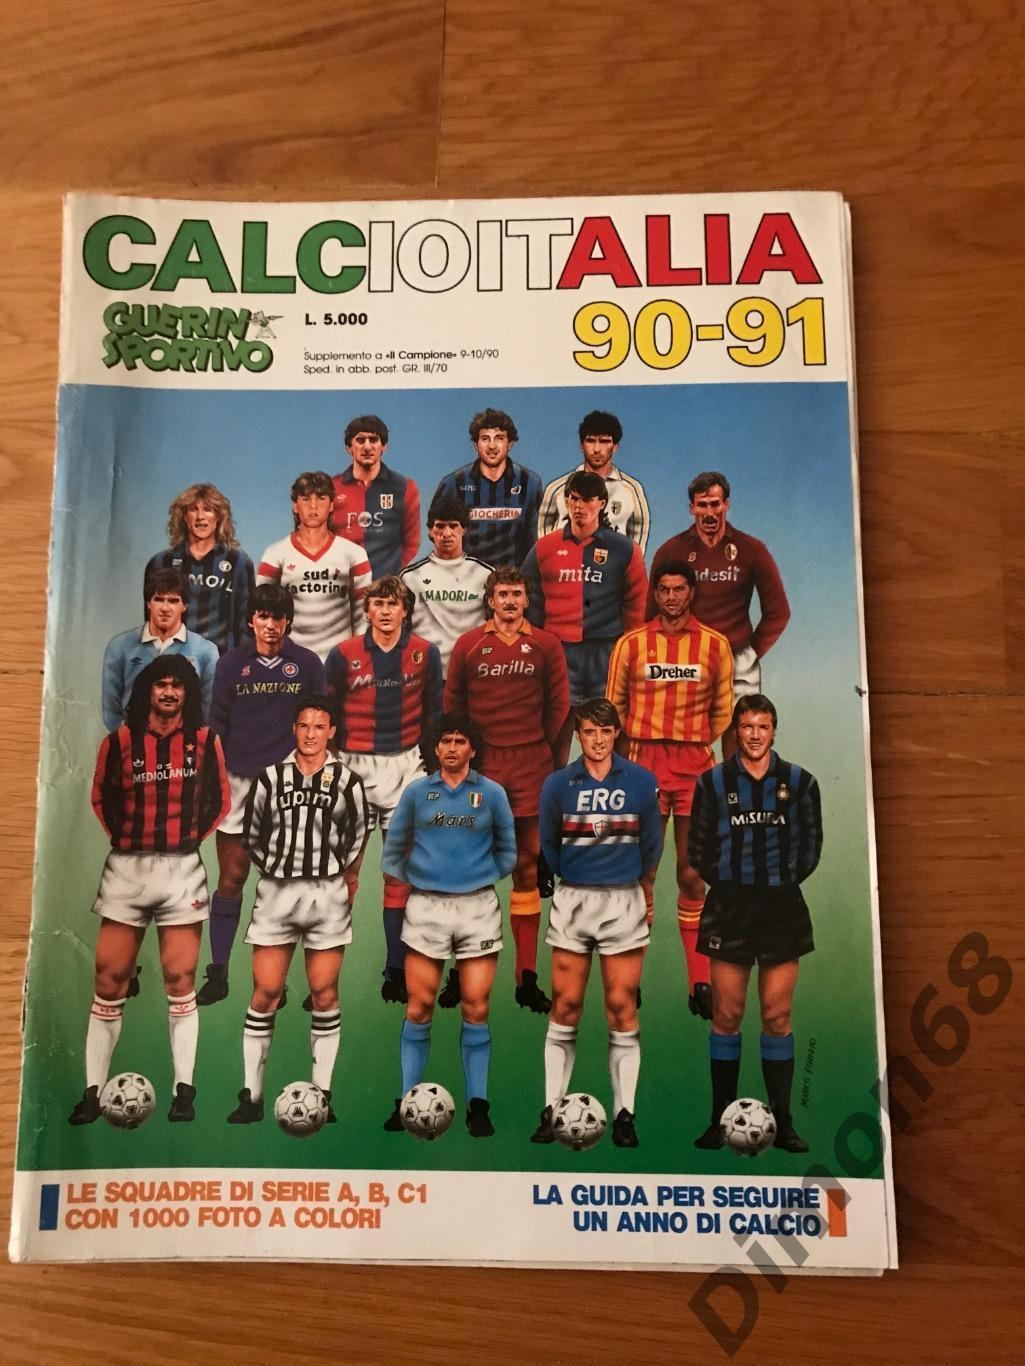 Calcioitalia 90/91г представление серии A,B,C1журнал целый